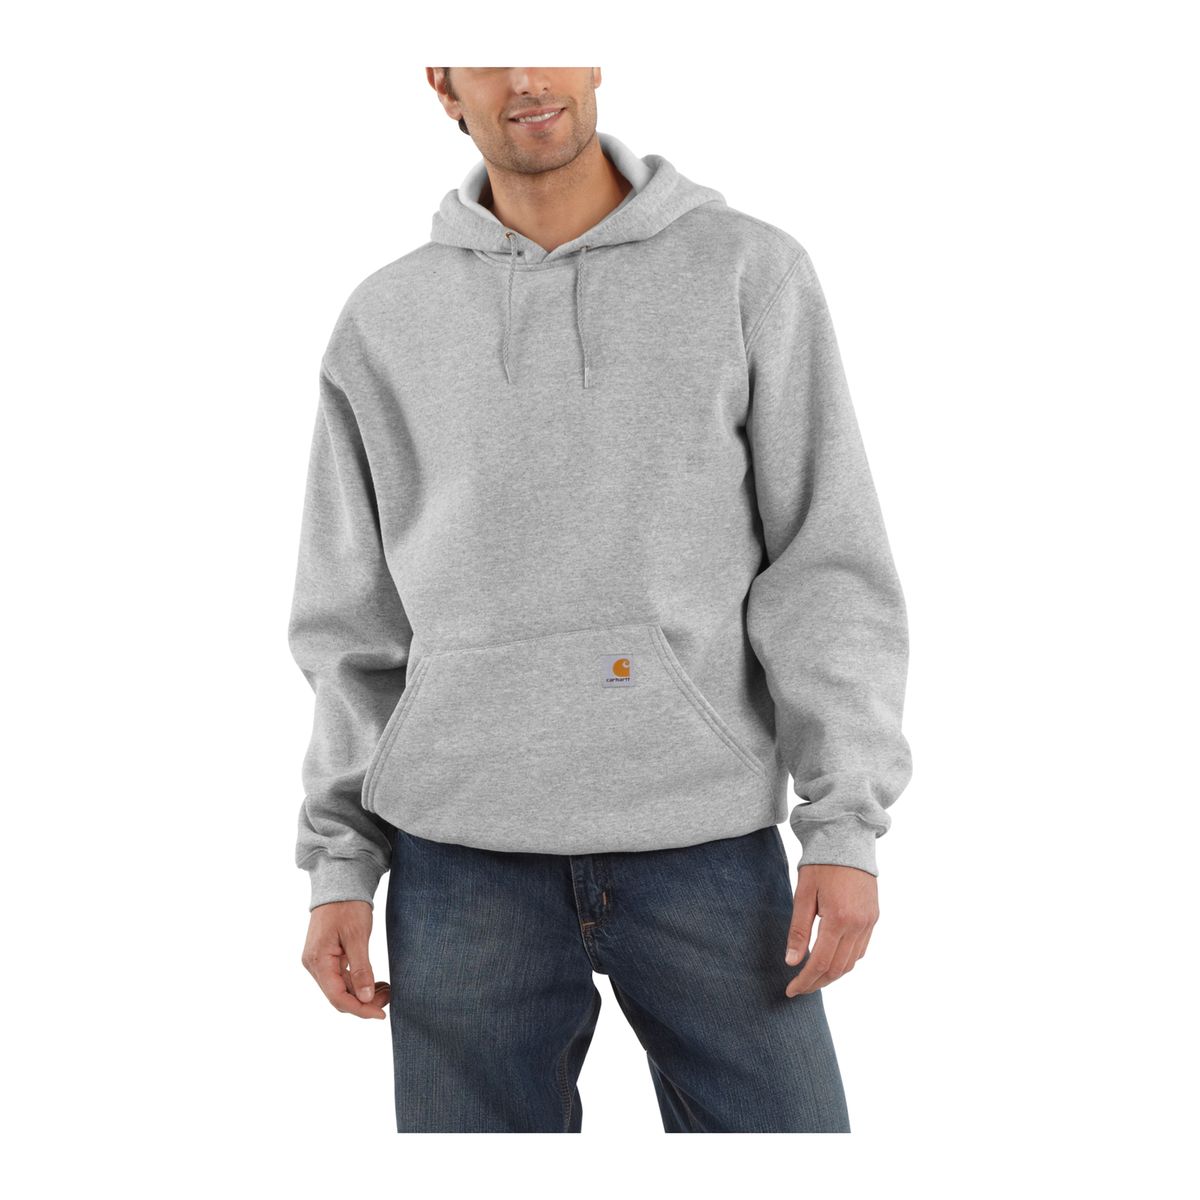 Men's Loose Fit Midweight Hooded Sweatshirt